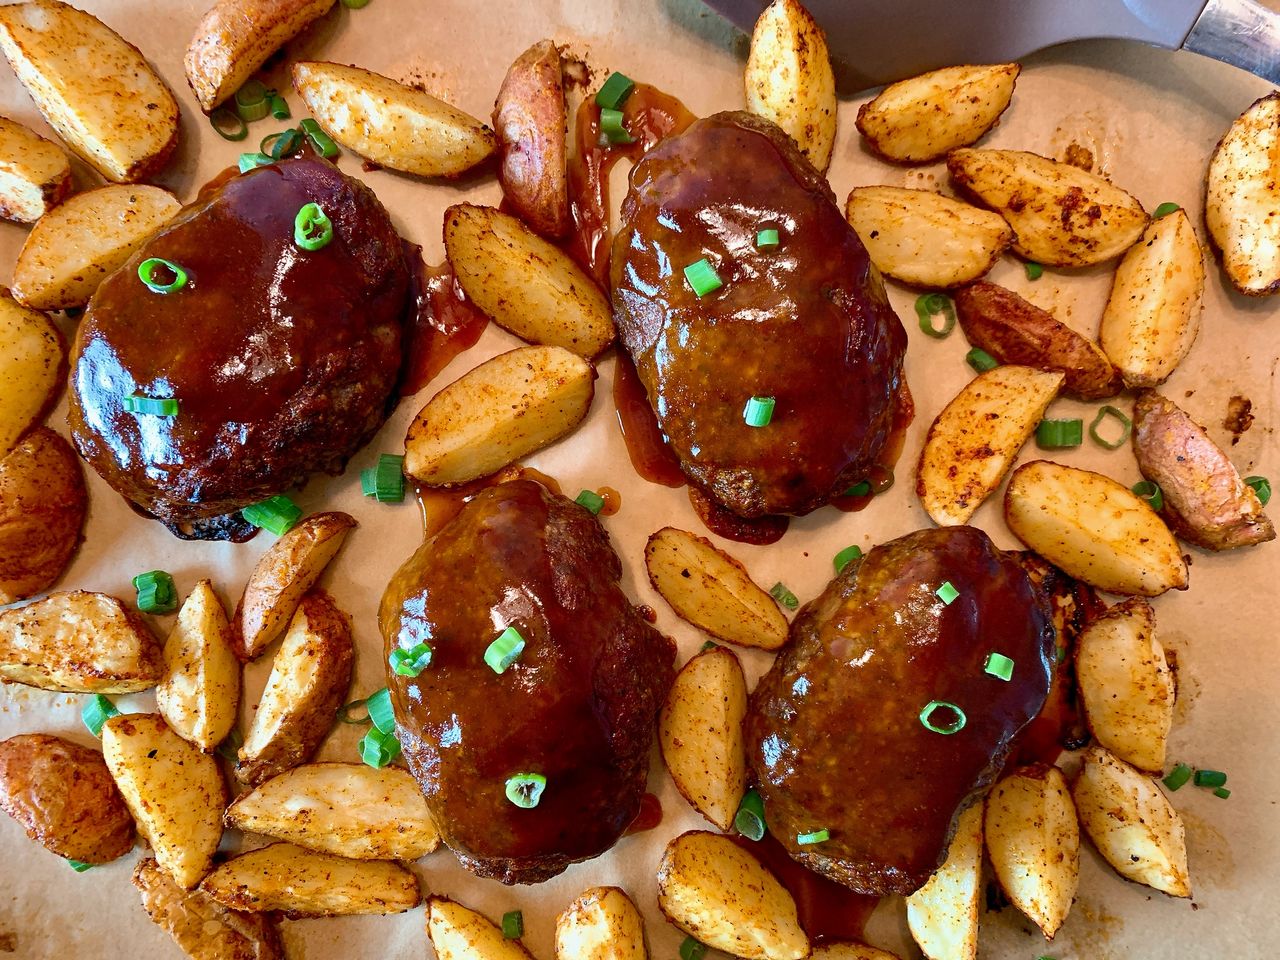 Sheet Pan Mini Meatloaf and Roasted Potatoes - The Recipe Rebel